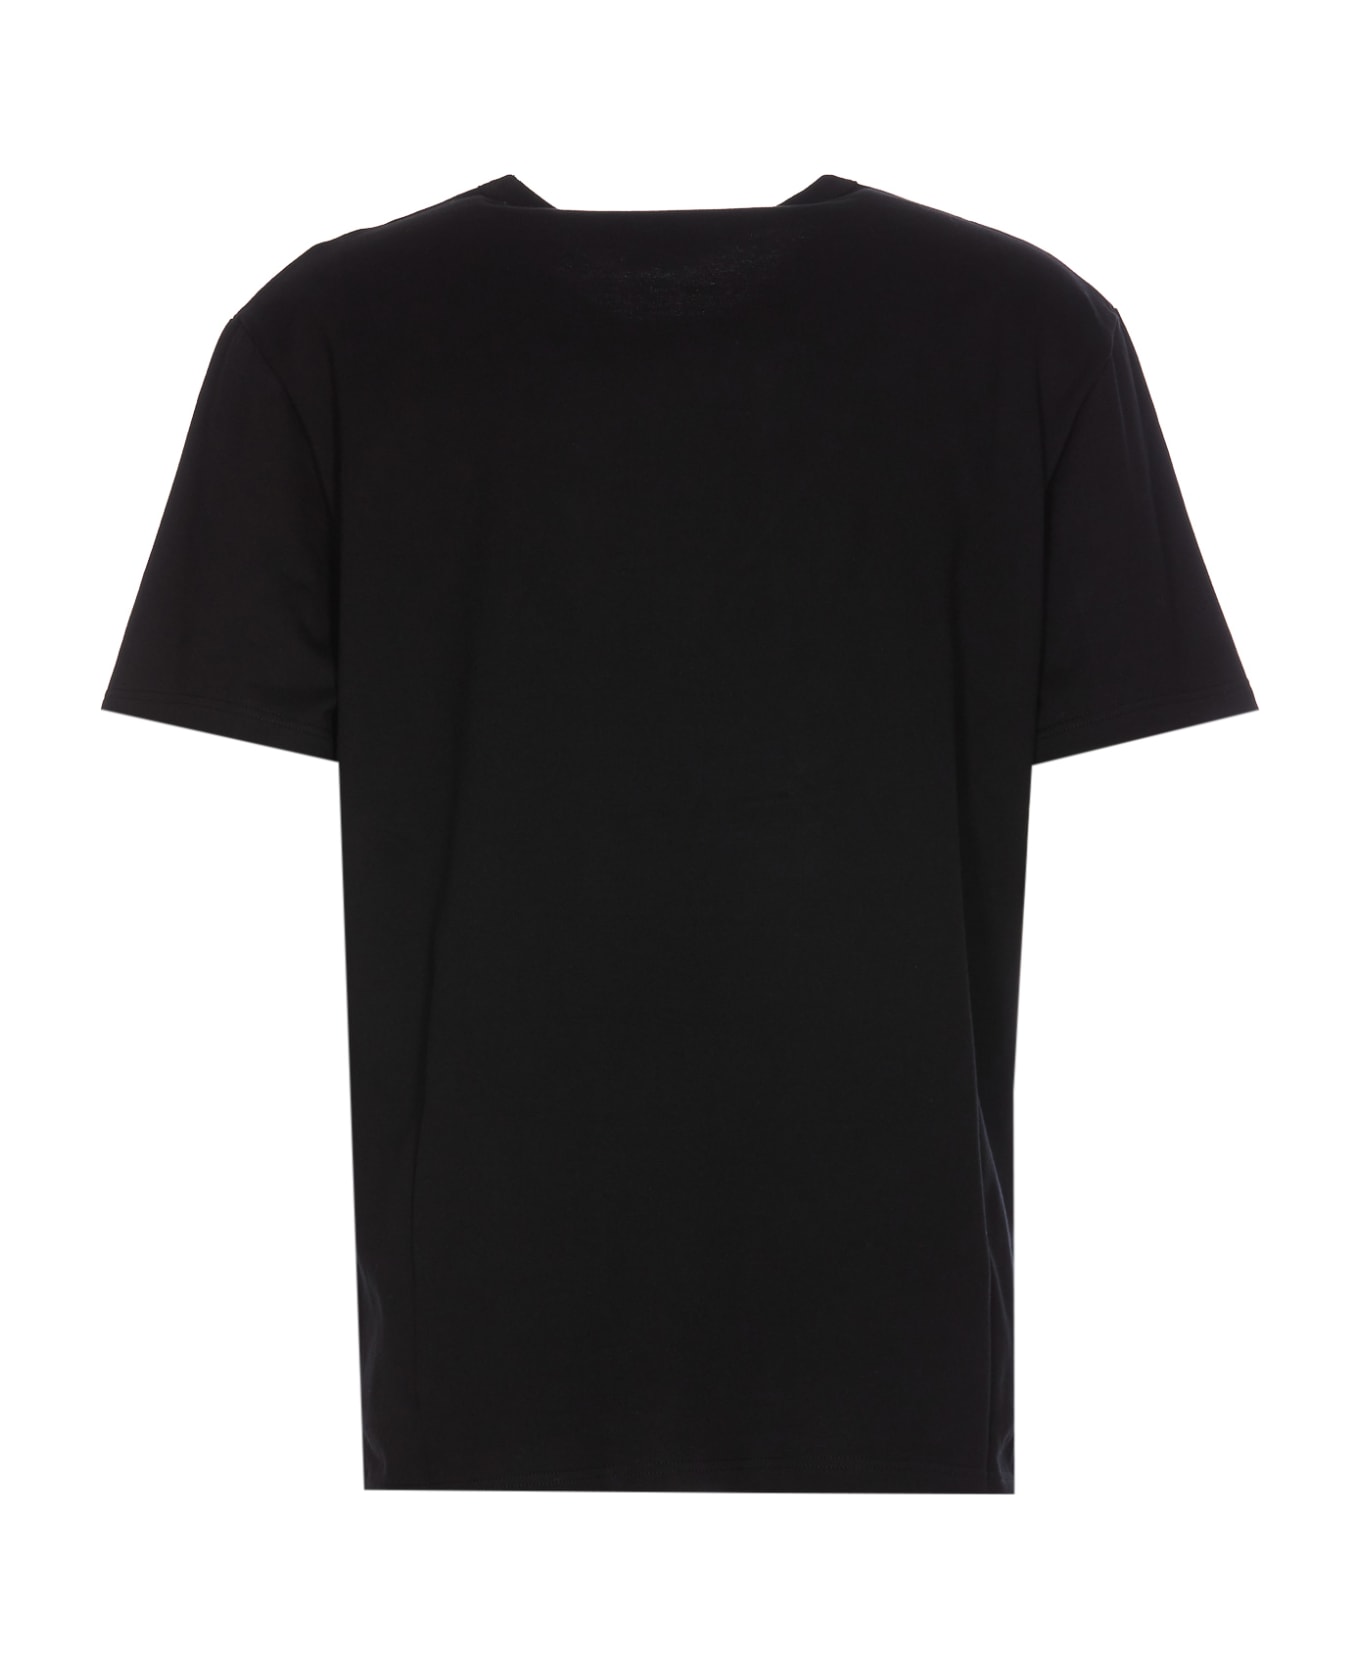 Alexander McQueen Logo Embroidered Crewneck T-shirt - Black